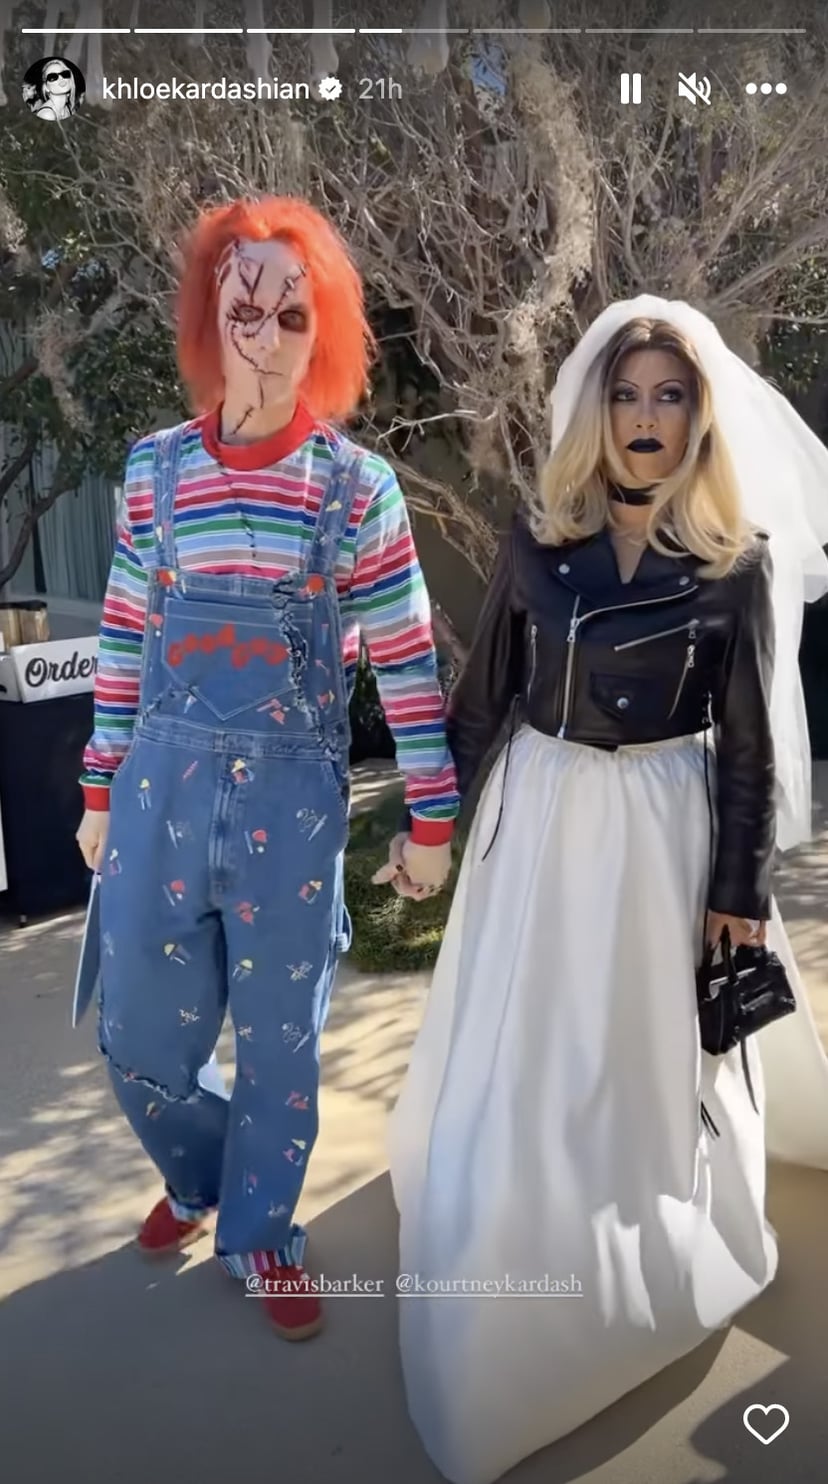 Chucky & Bride of Chucky Costumes - Chucky Doll Costumes